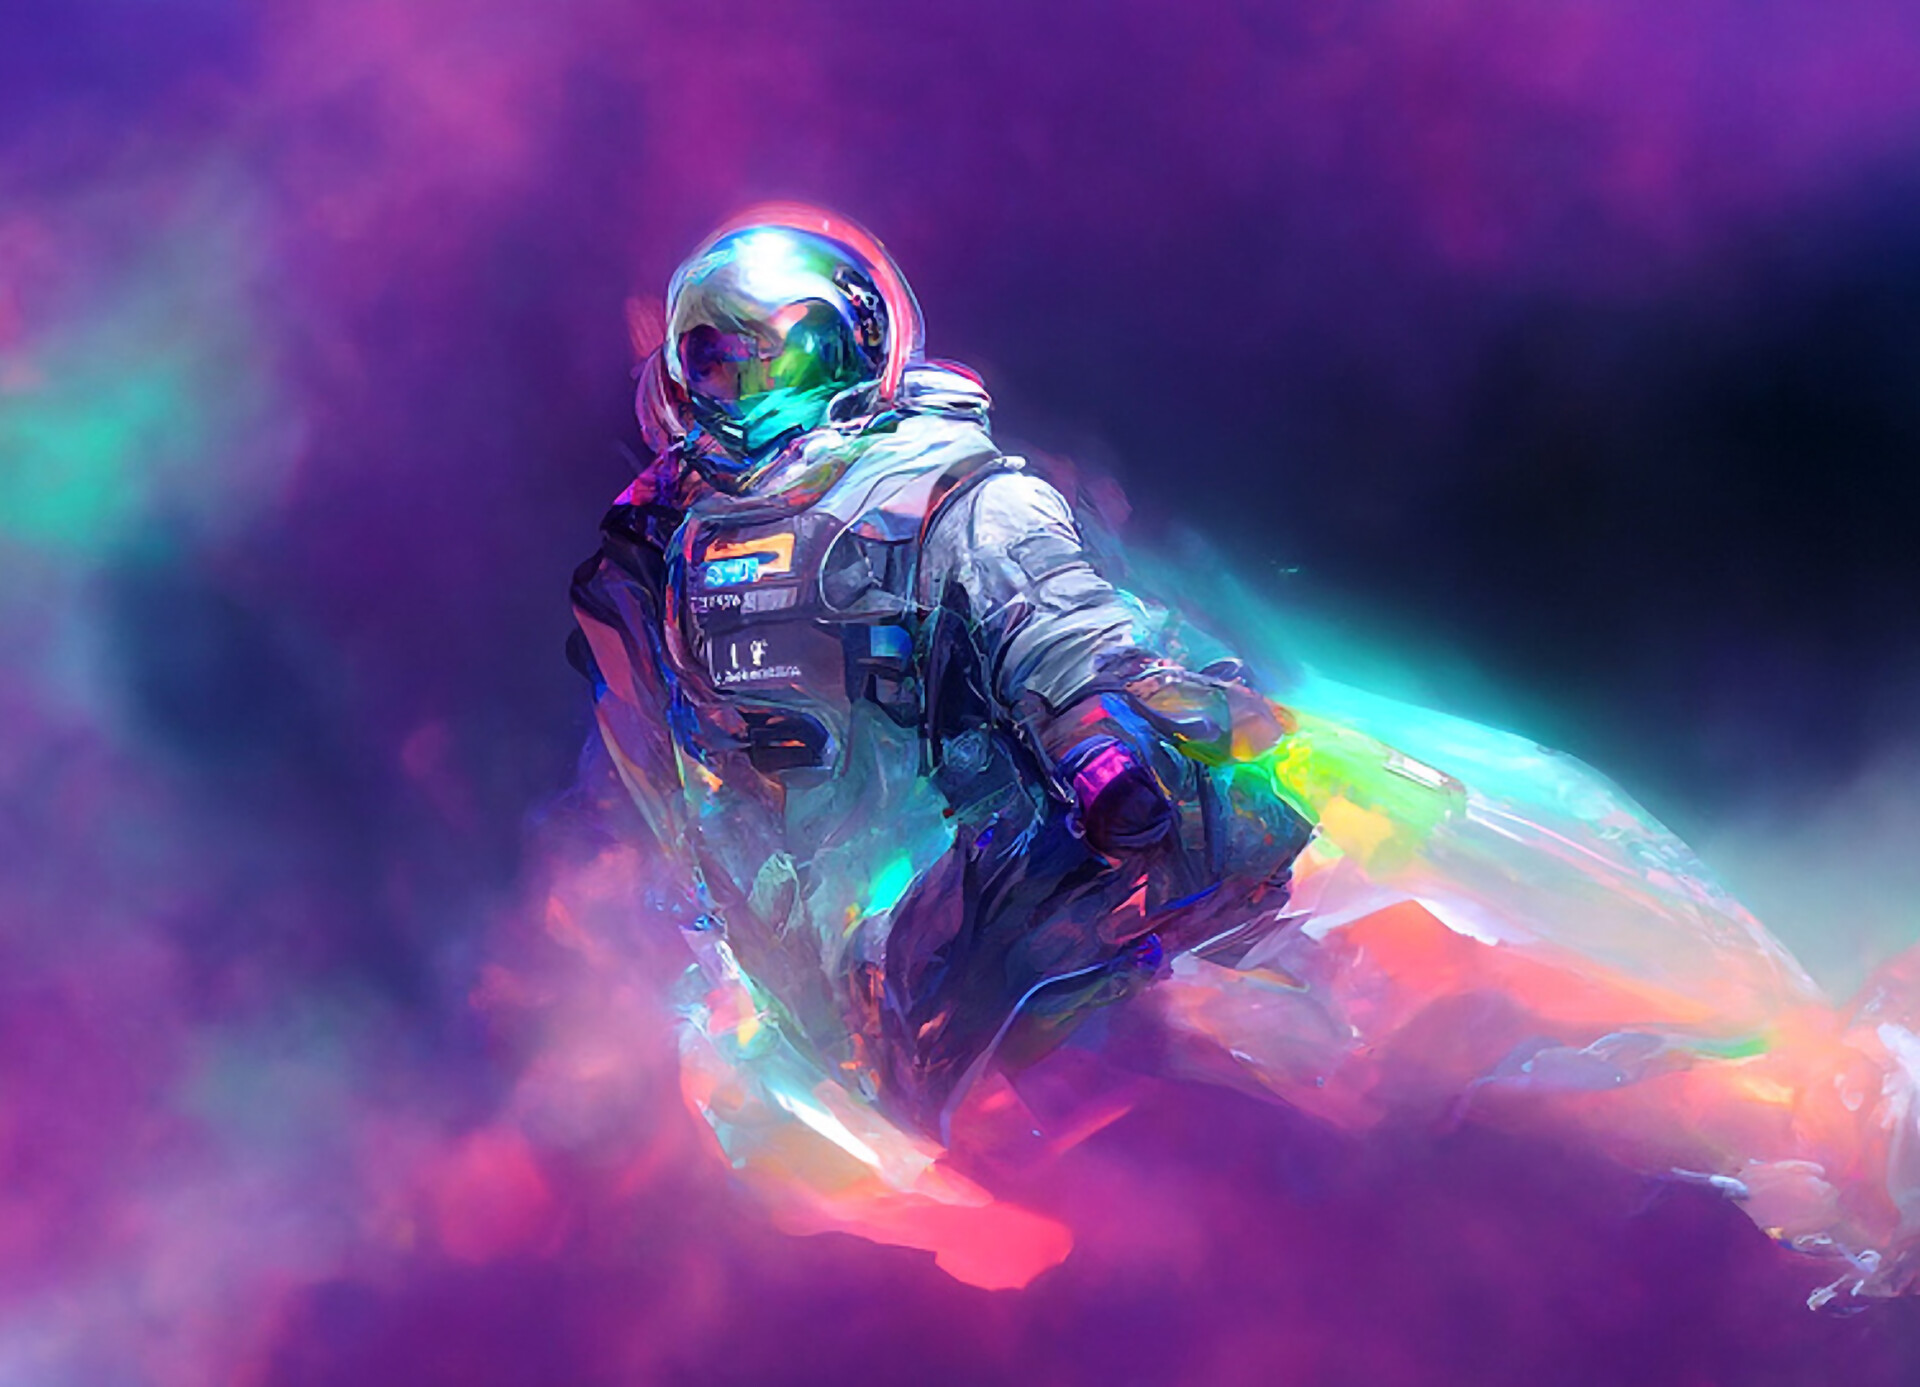 LV-426 by =ChunLo [dA]  Space art, Astronaut art, Concept art